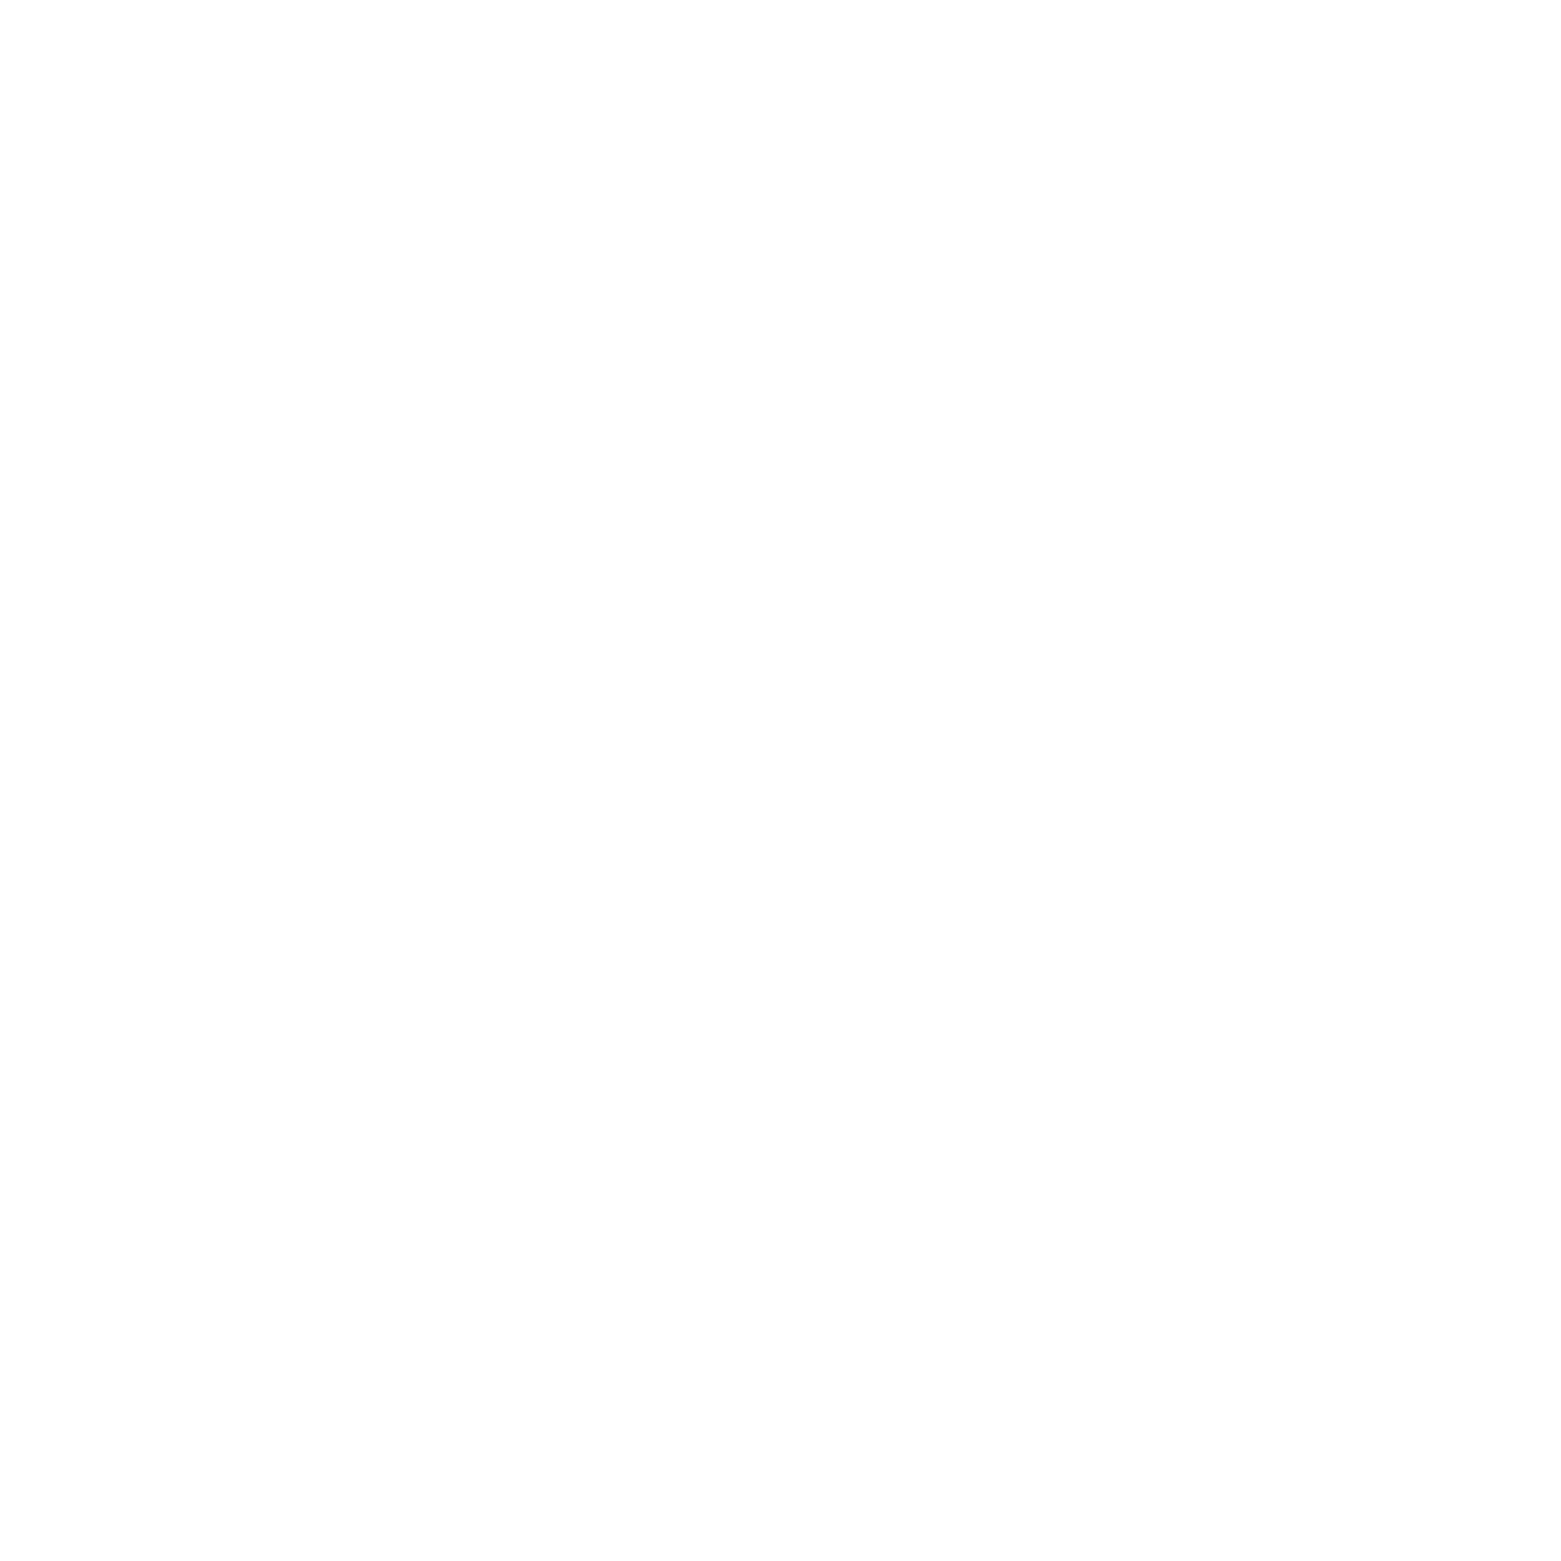 Habitant Productions - Mexico City